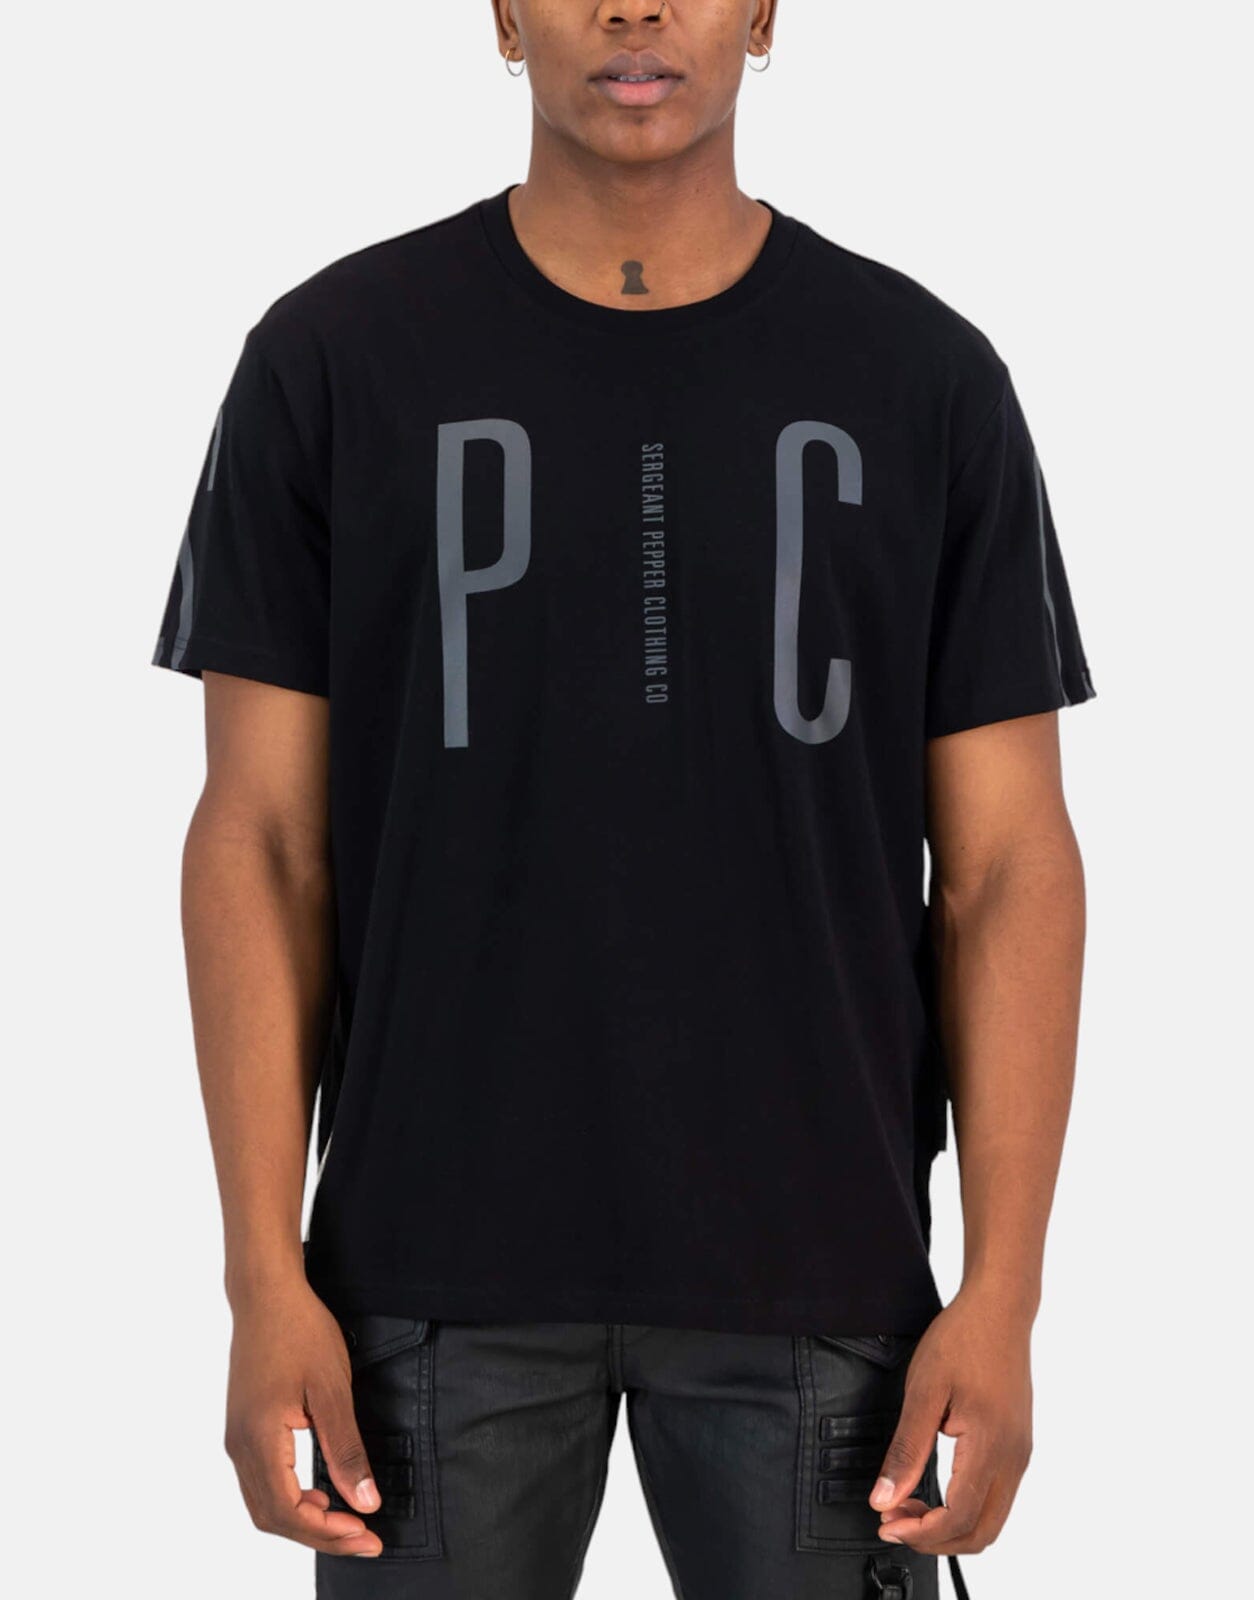 SPCC Devlin Black T-Shirt - Subwear